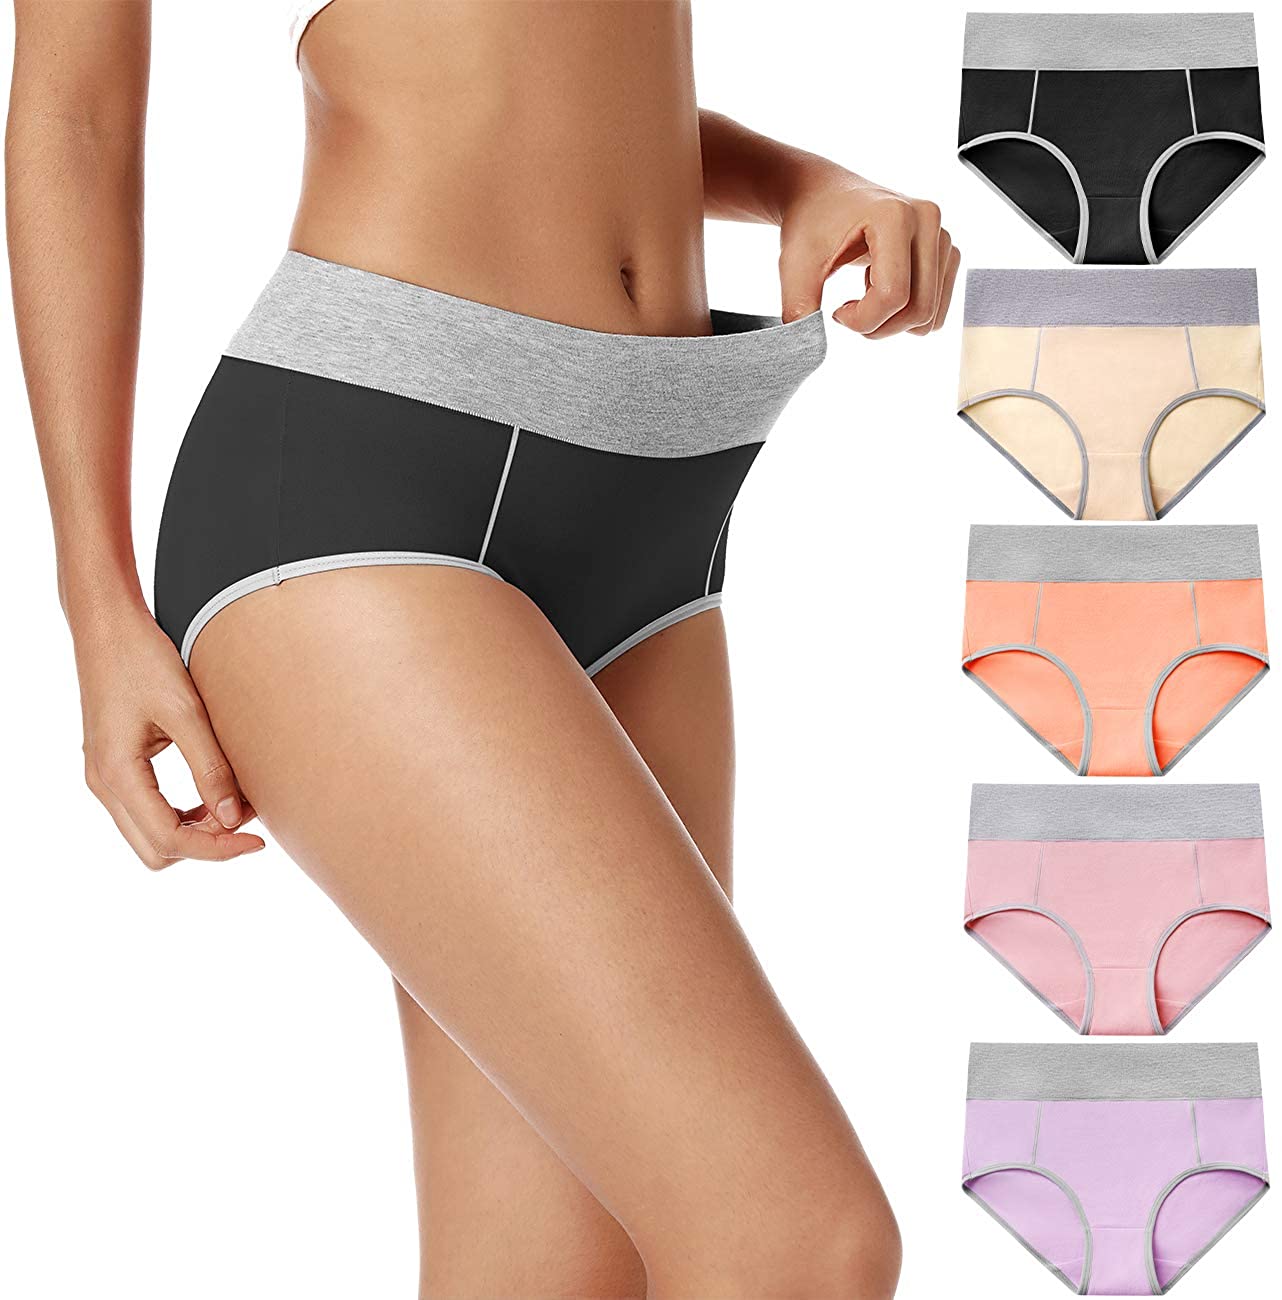 Buy Kinyanco 5-Pack High Waist Tummy Control Panties for Women